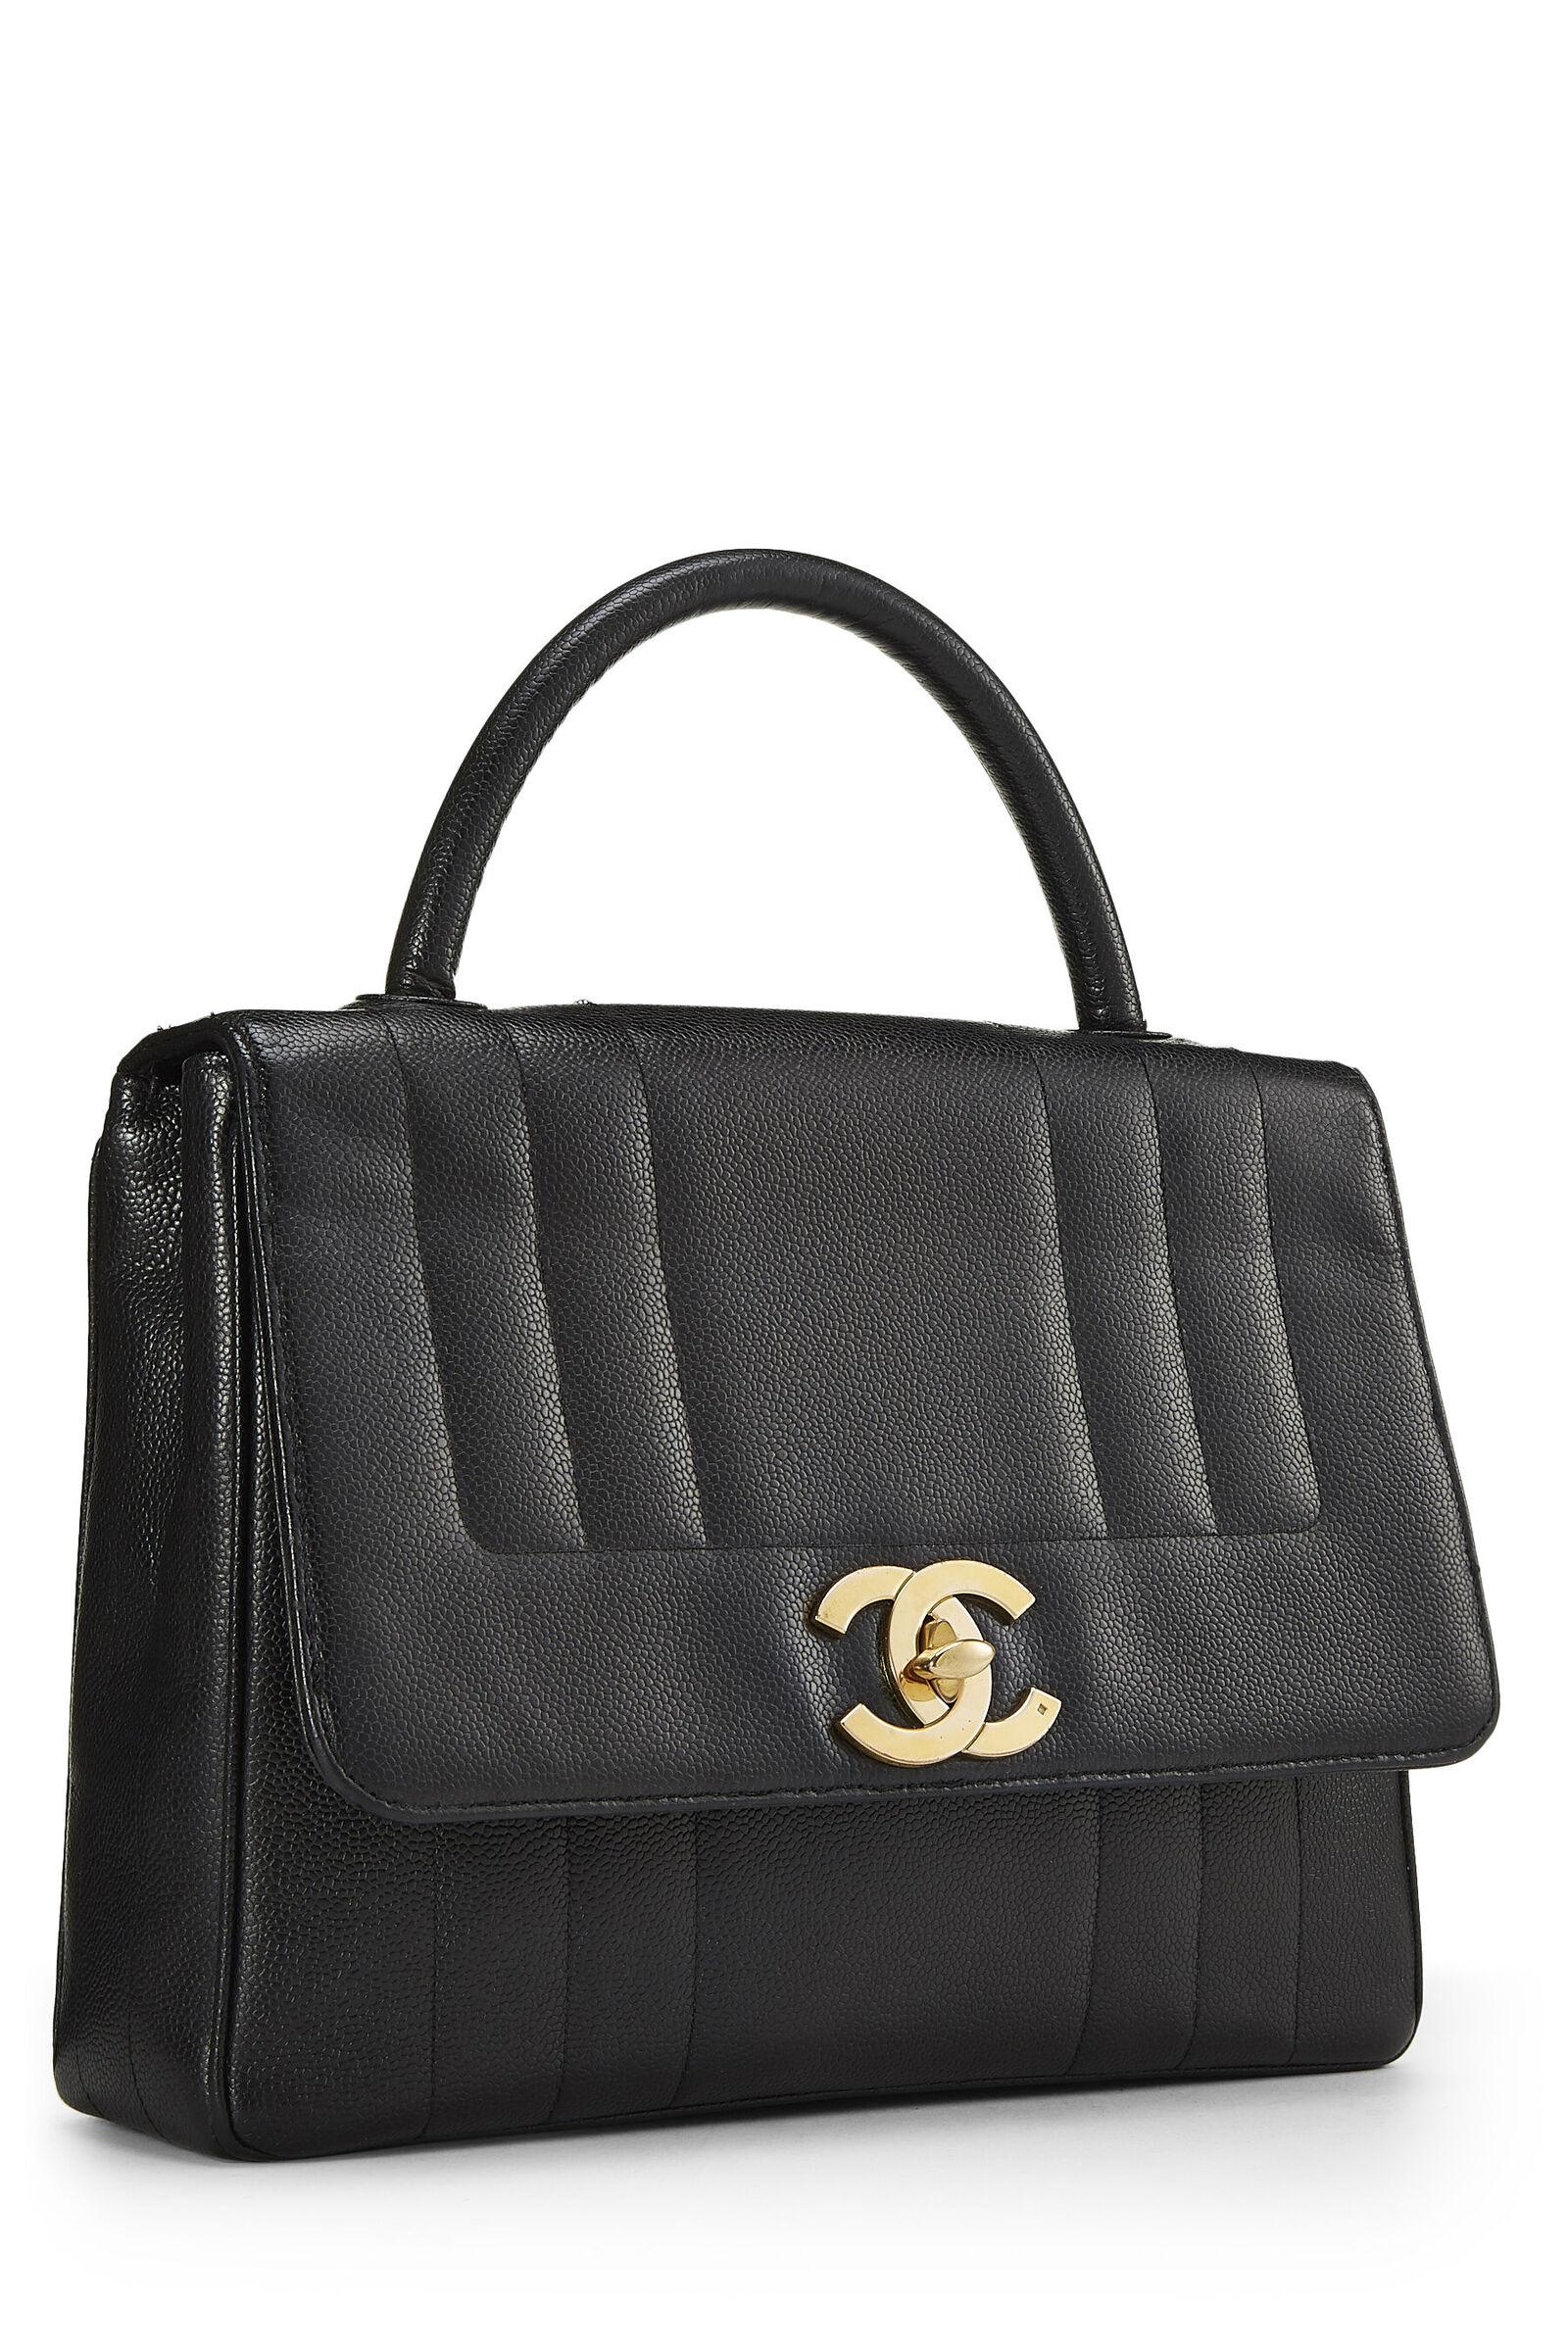 Chanel Vintage Rare Noir Caviar Top Handle Classic Kelly Flap Bag en vente 1